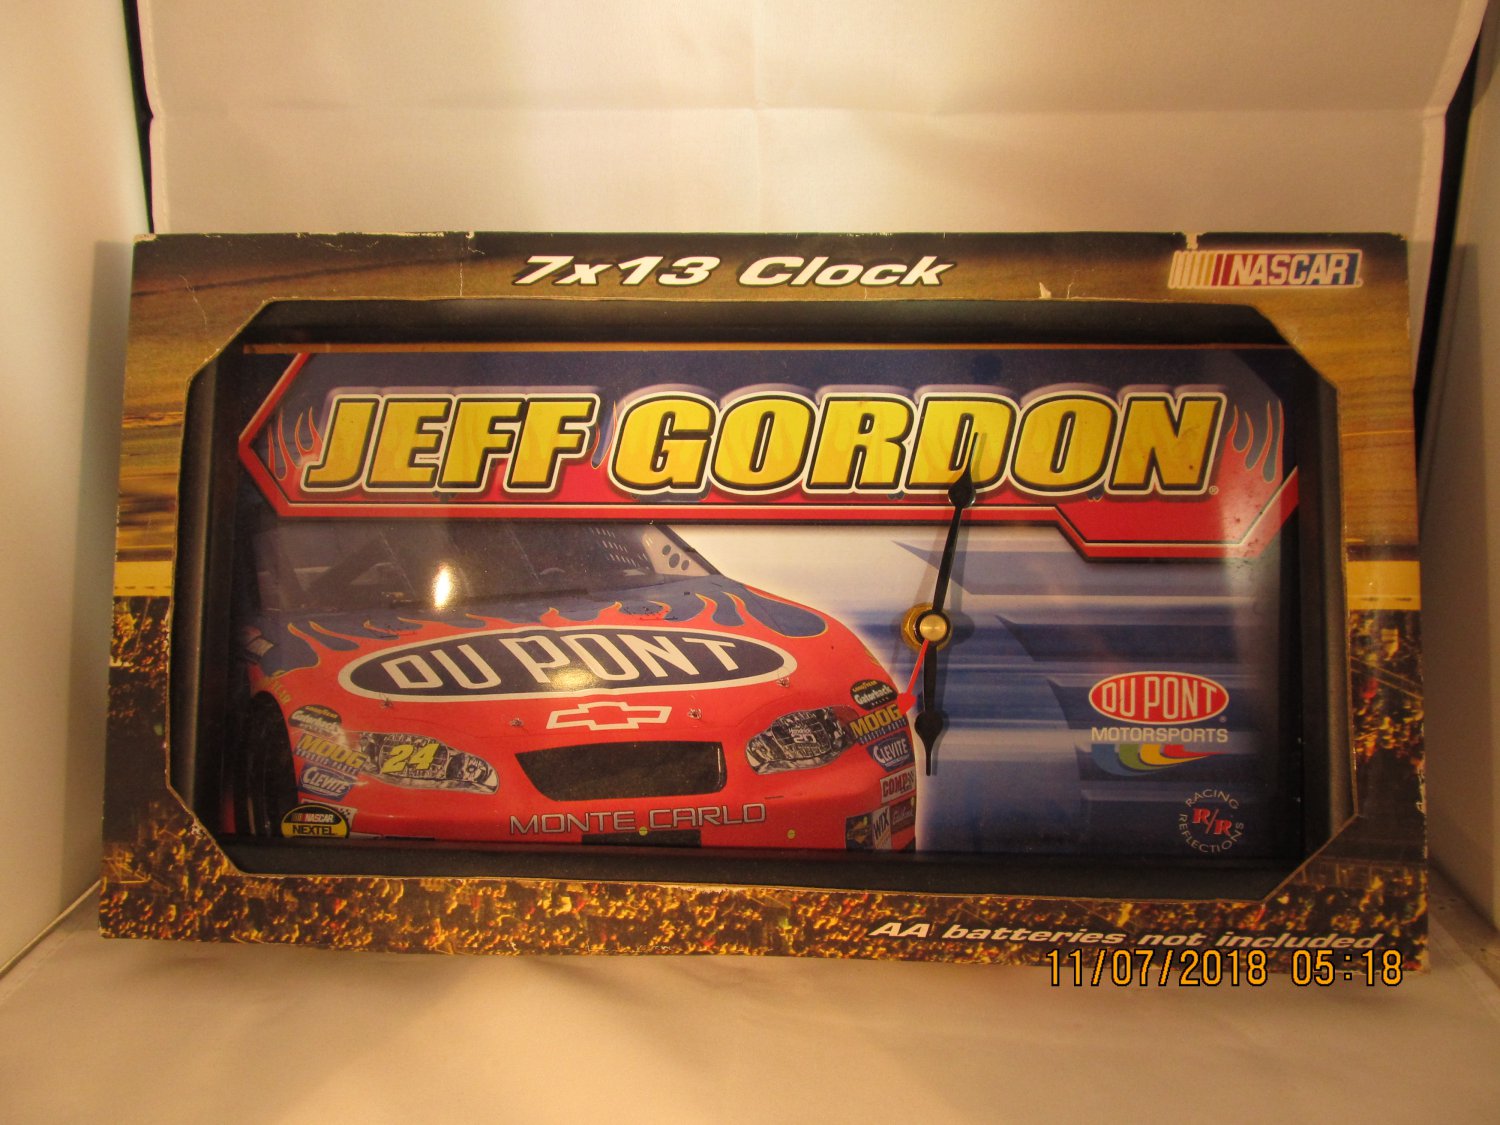 2005 MIB Jeff Gordon Nascar 7x13 Clock